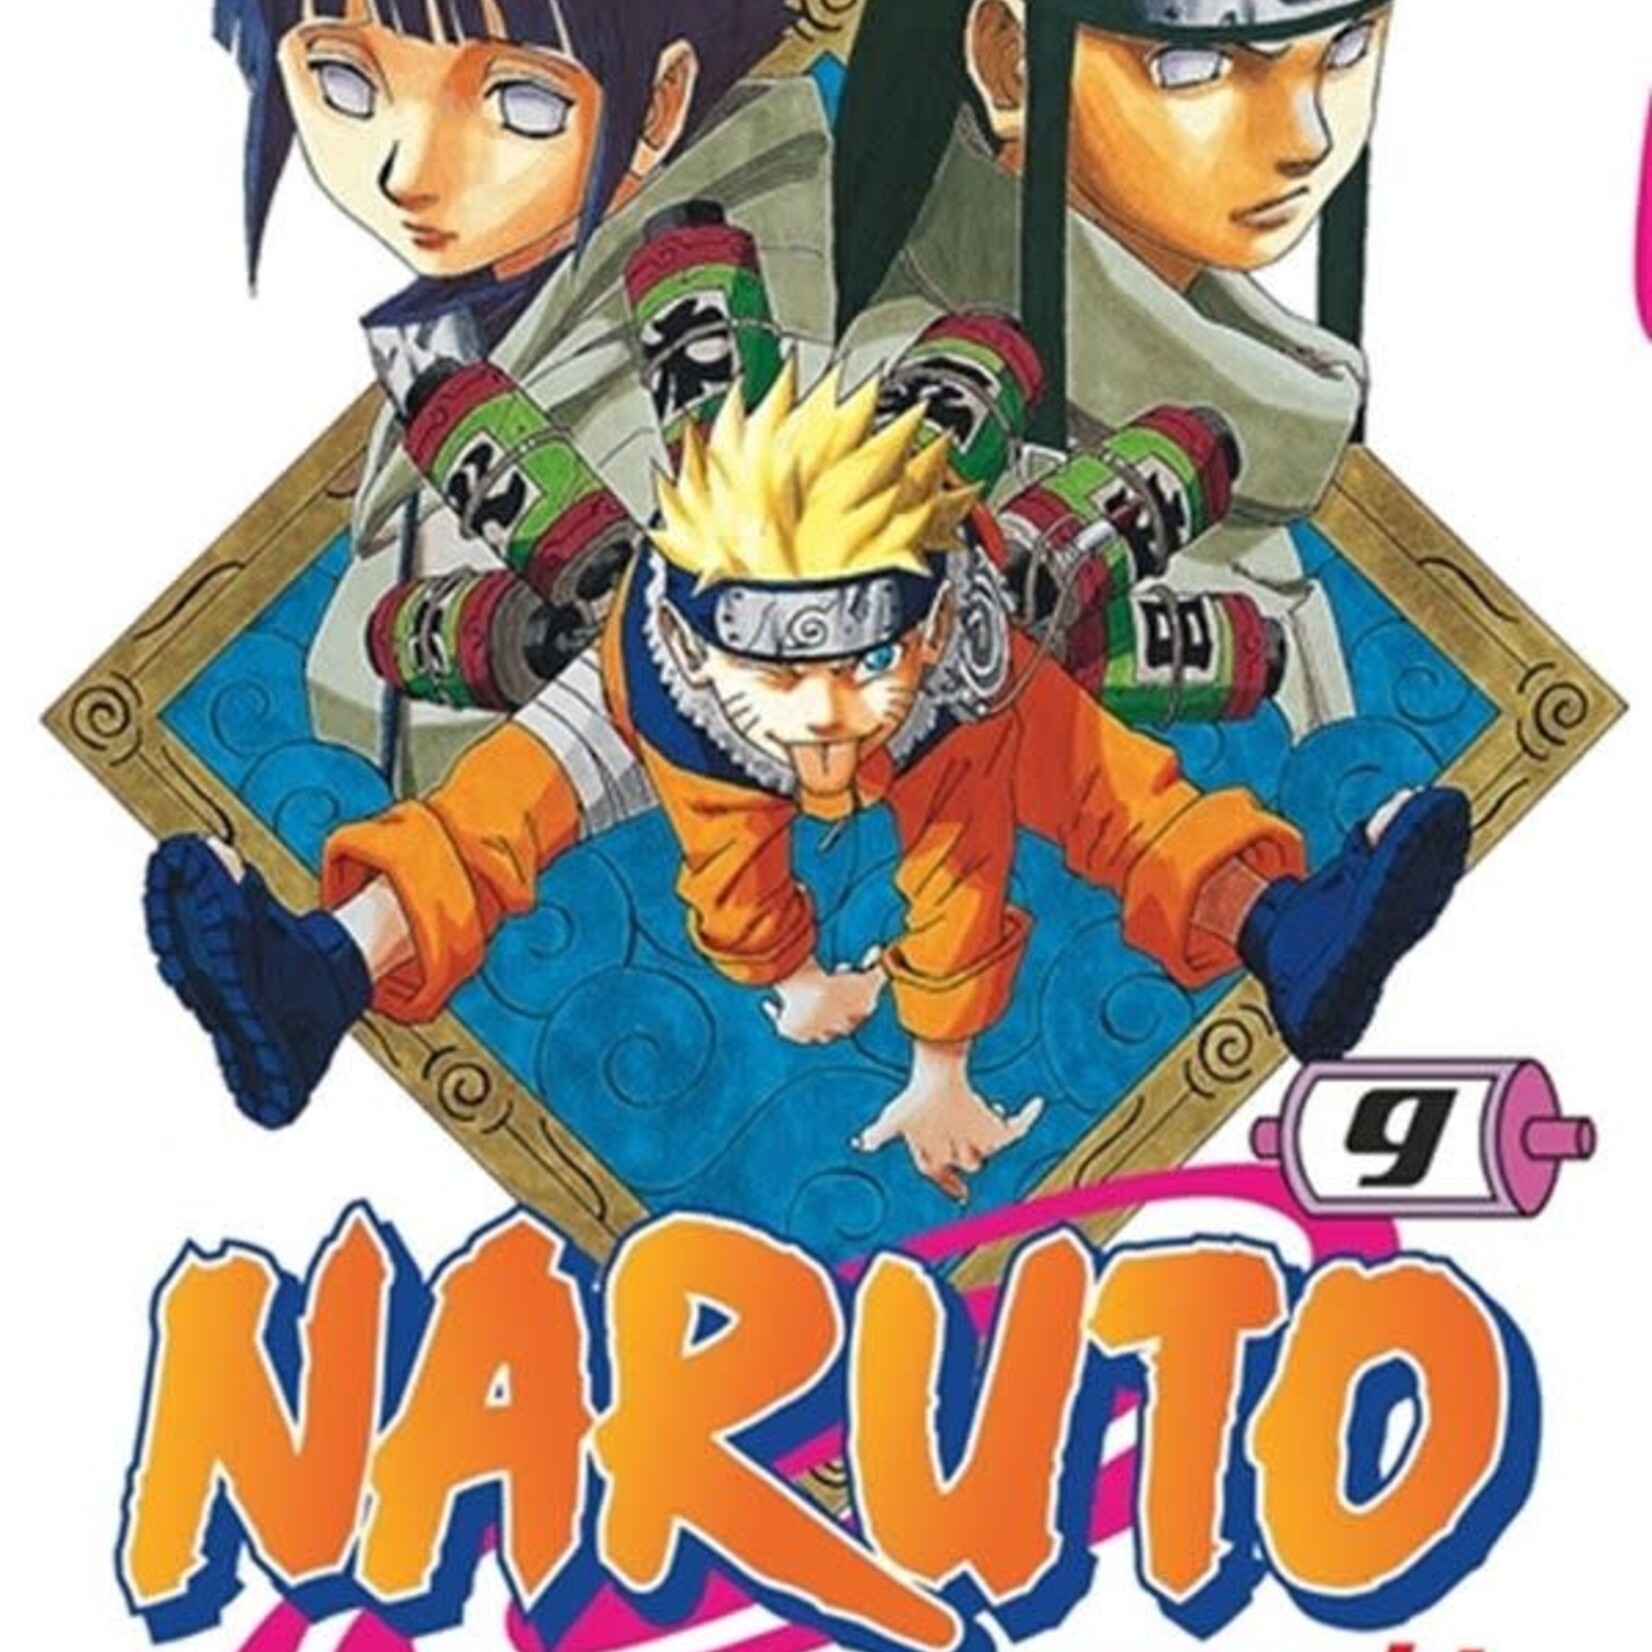 Kana Manga - Naruto Tome 09